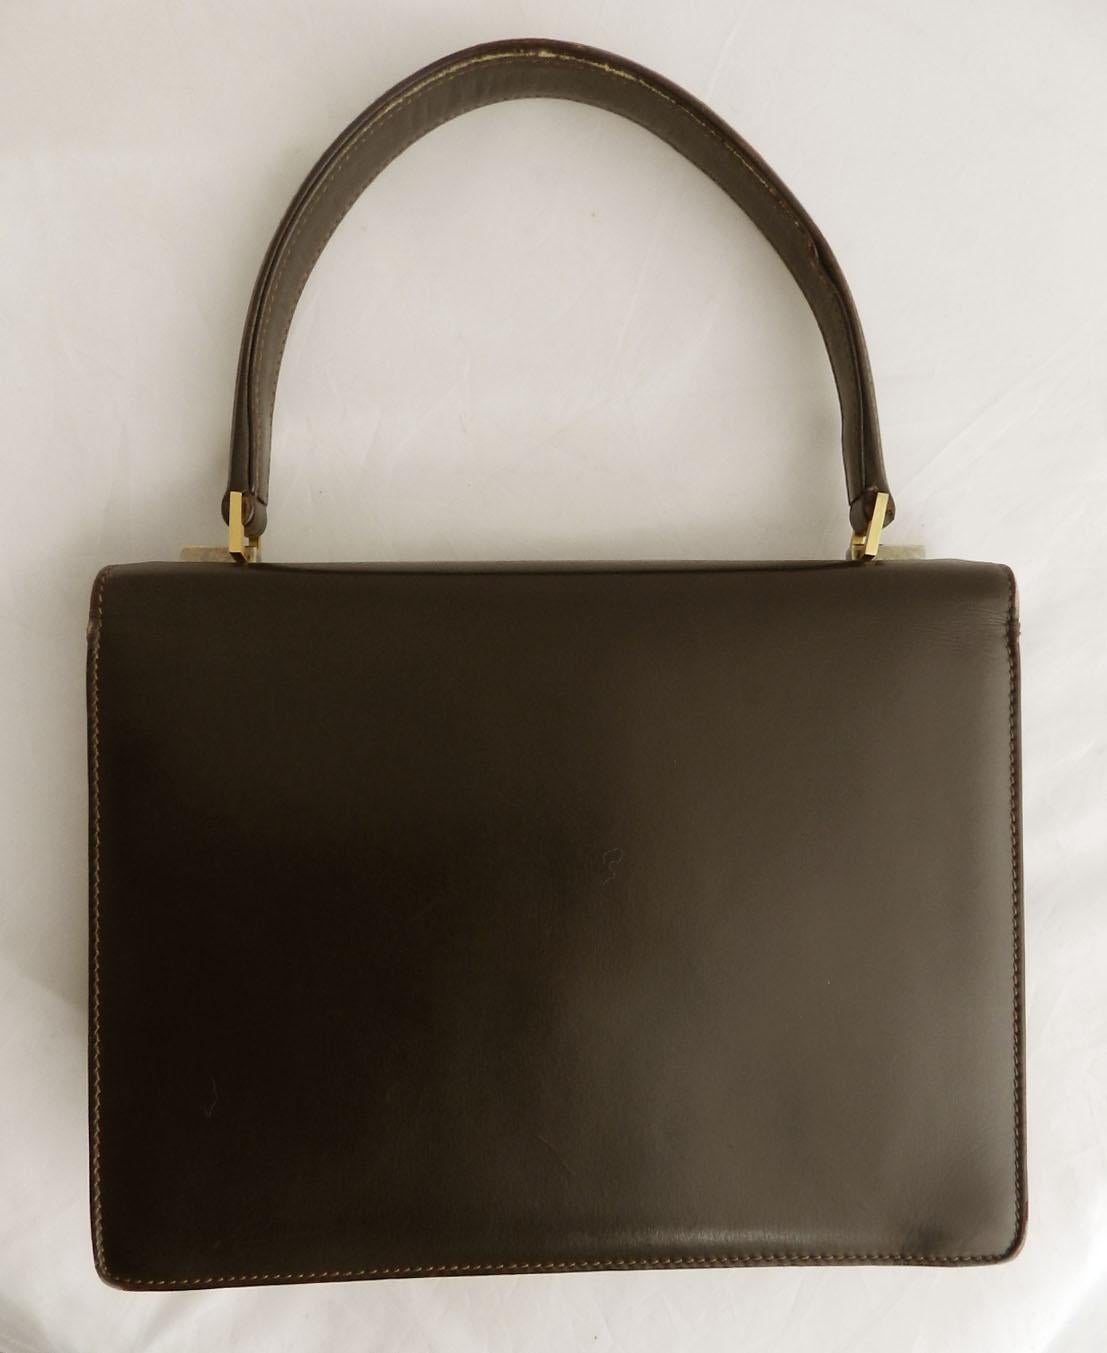 Gucci Brown Leather Handbag Top Handles Bag Vintage, Late 20th Century For Sale 2